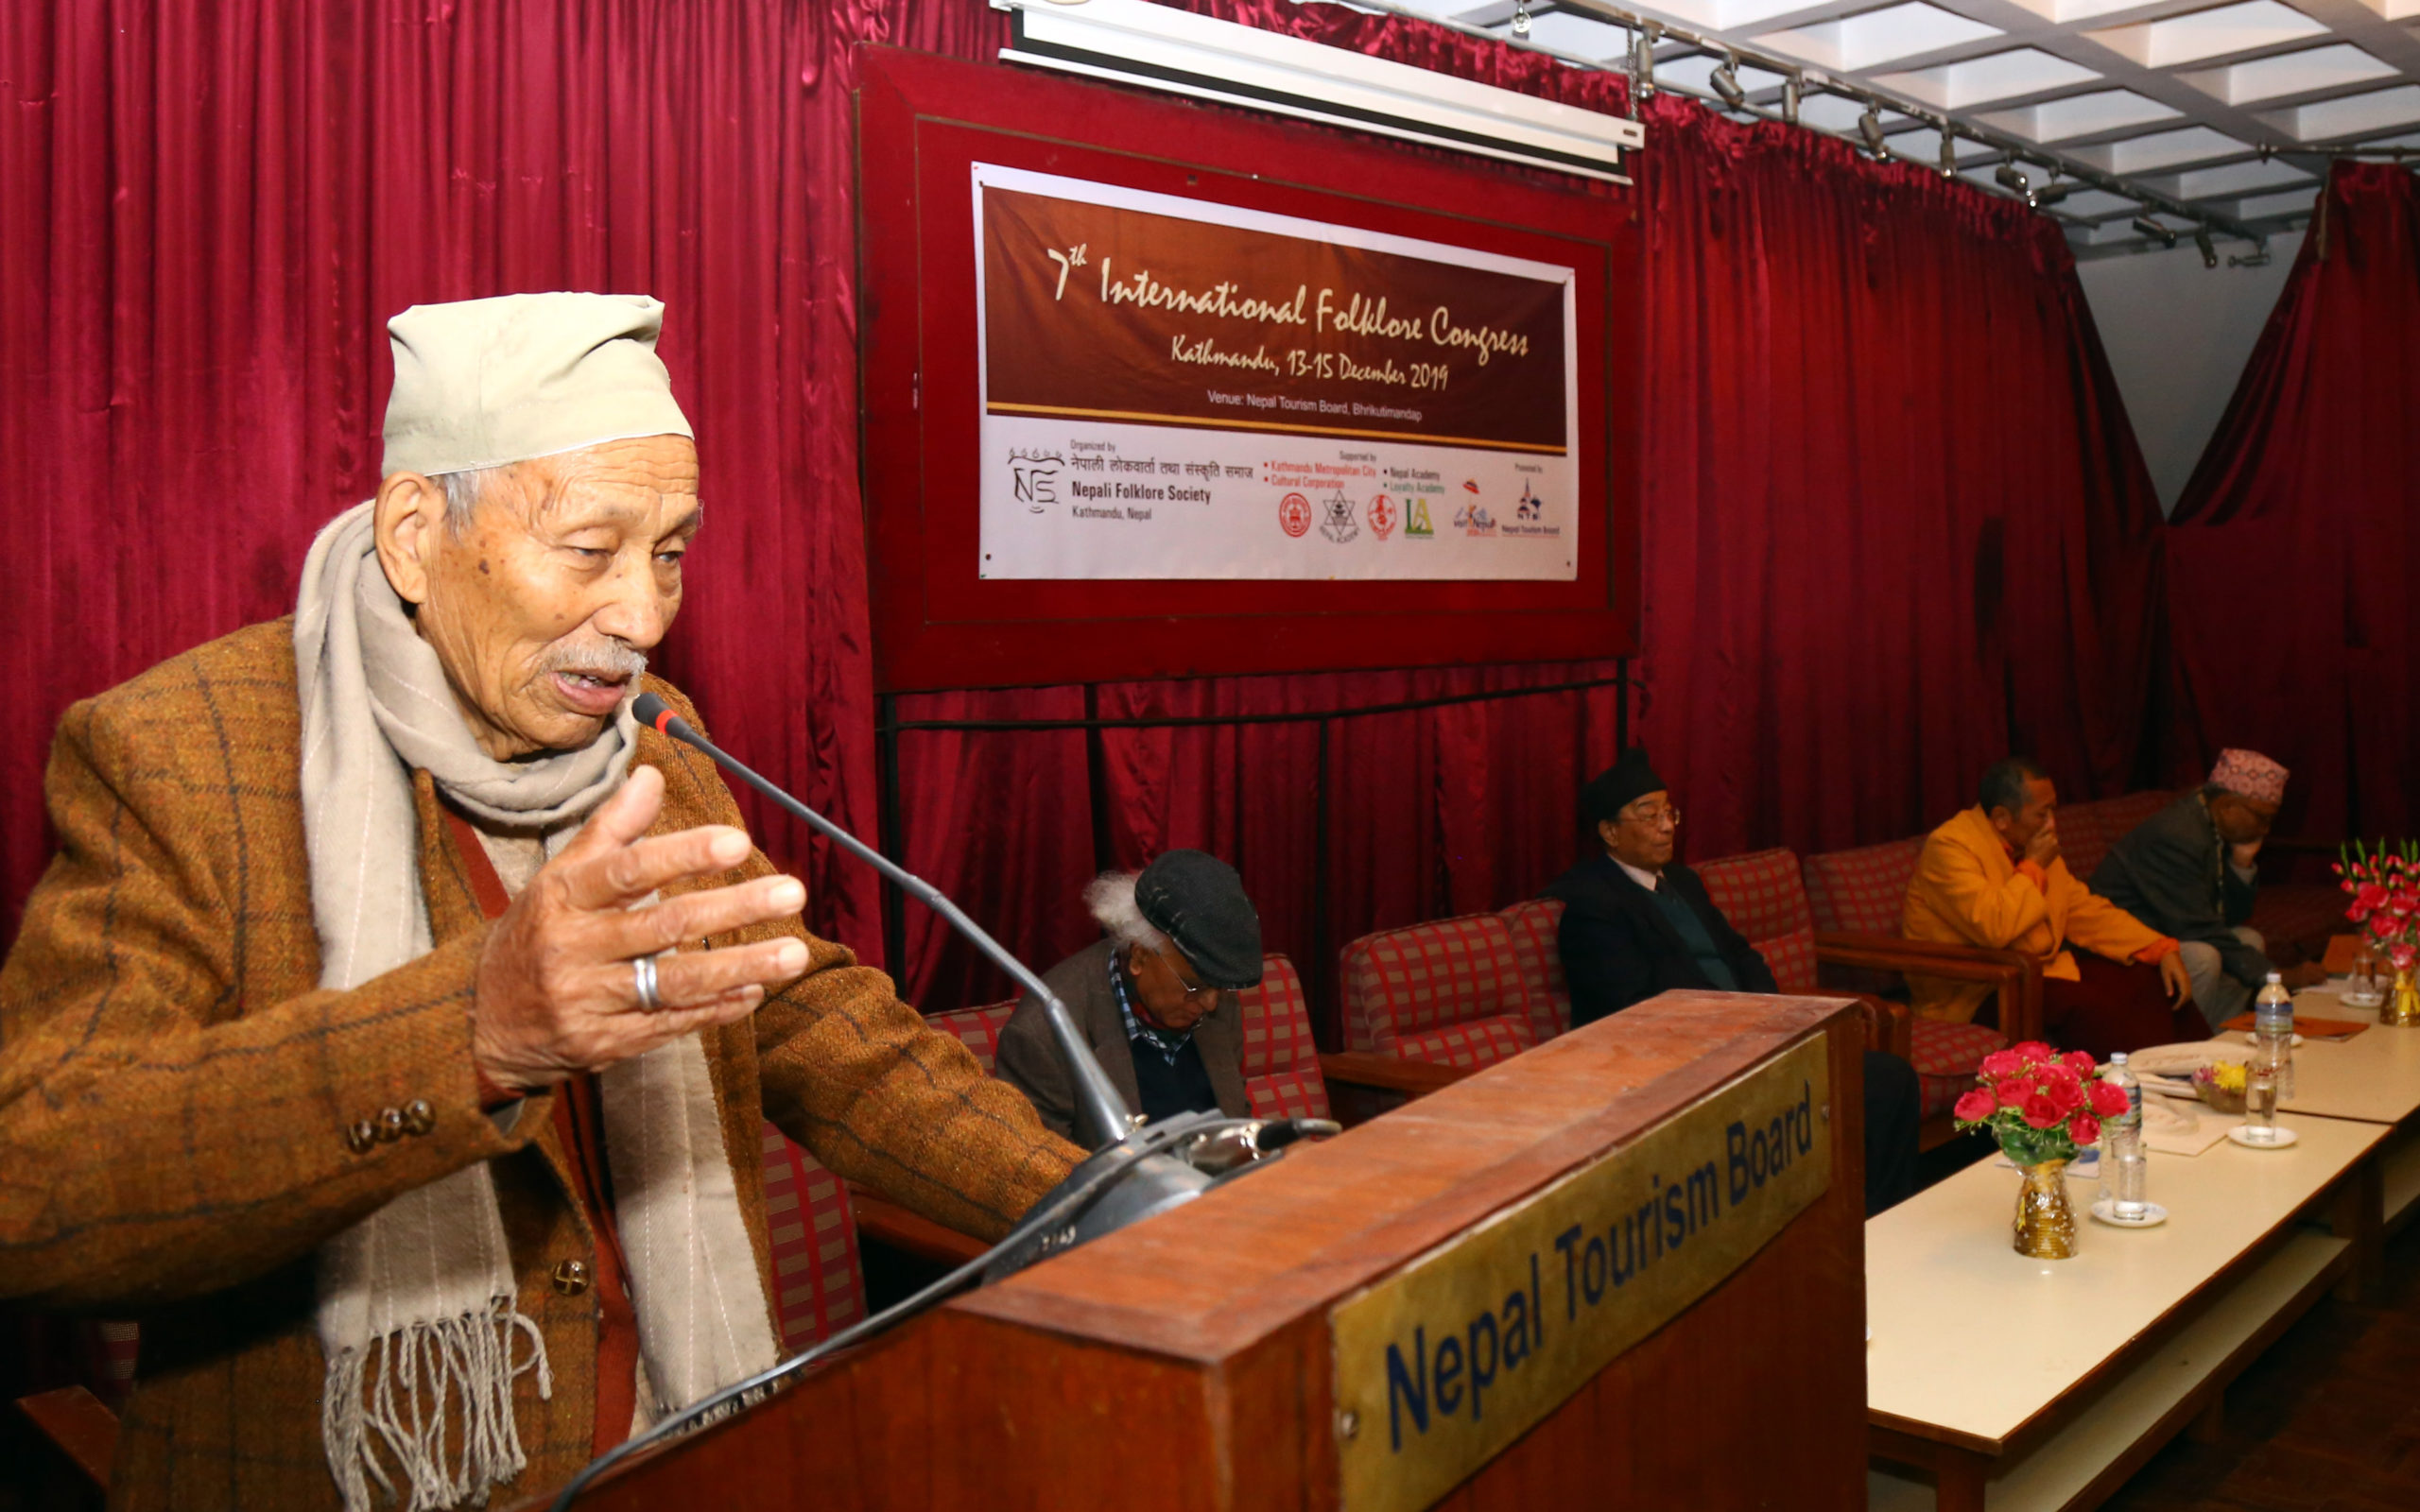 7th int’l folklore conference kicks off in Kathmandu